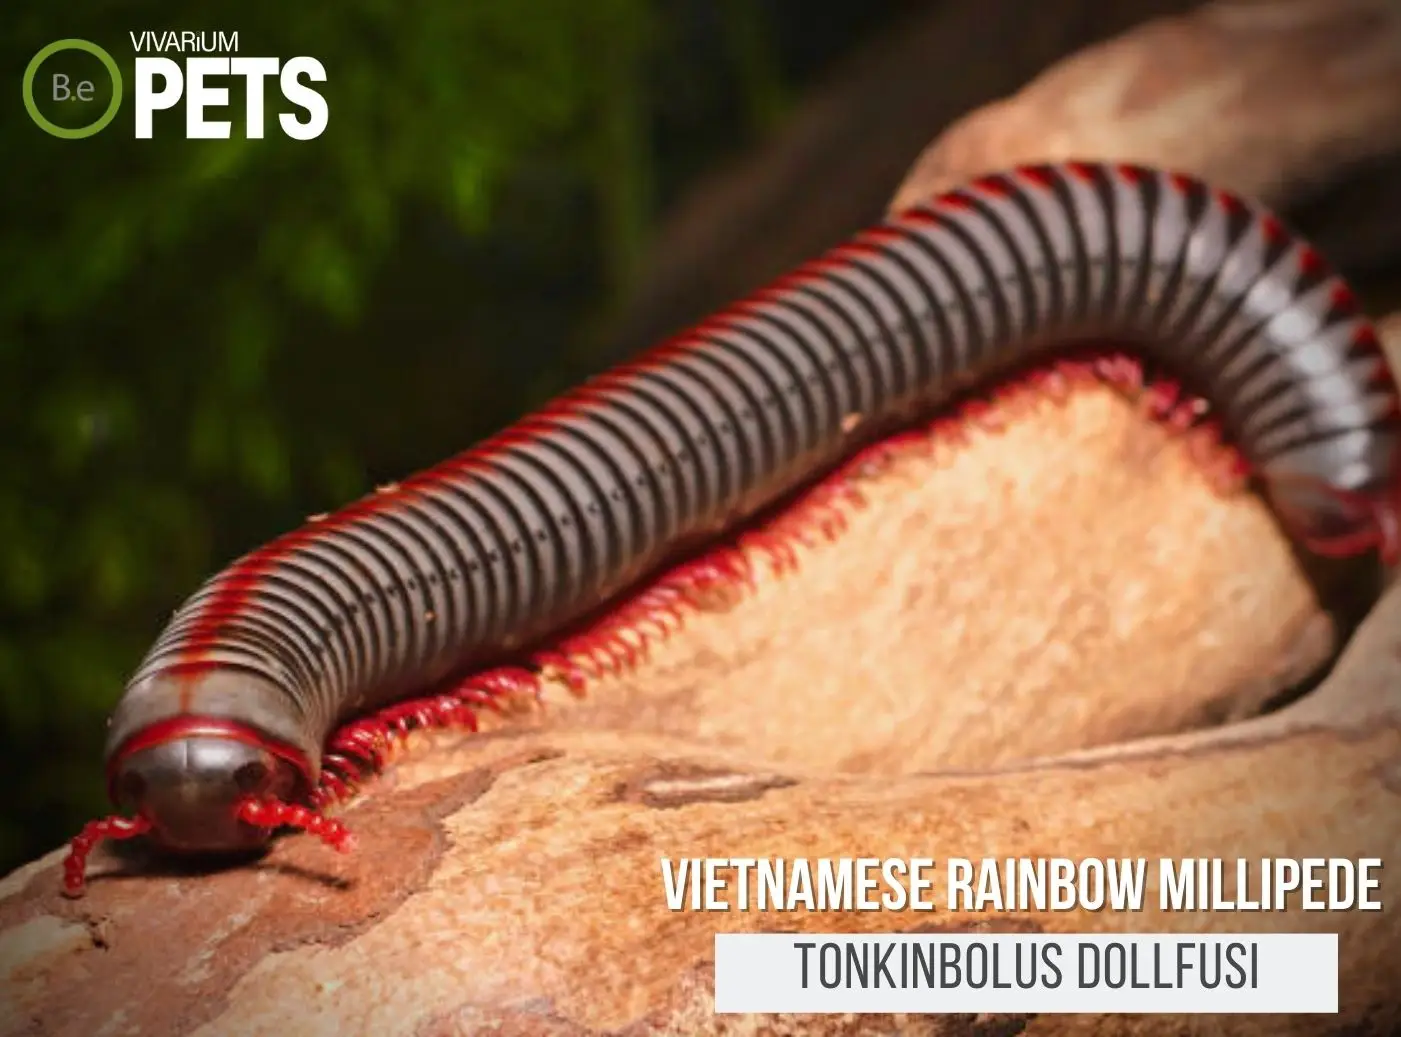 Tonkinbolus dollfusi "Vietnamese Rainbow Millipede" Care Guide